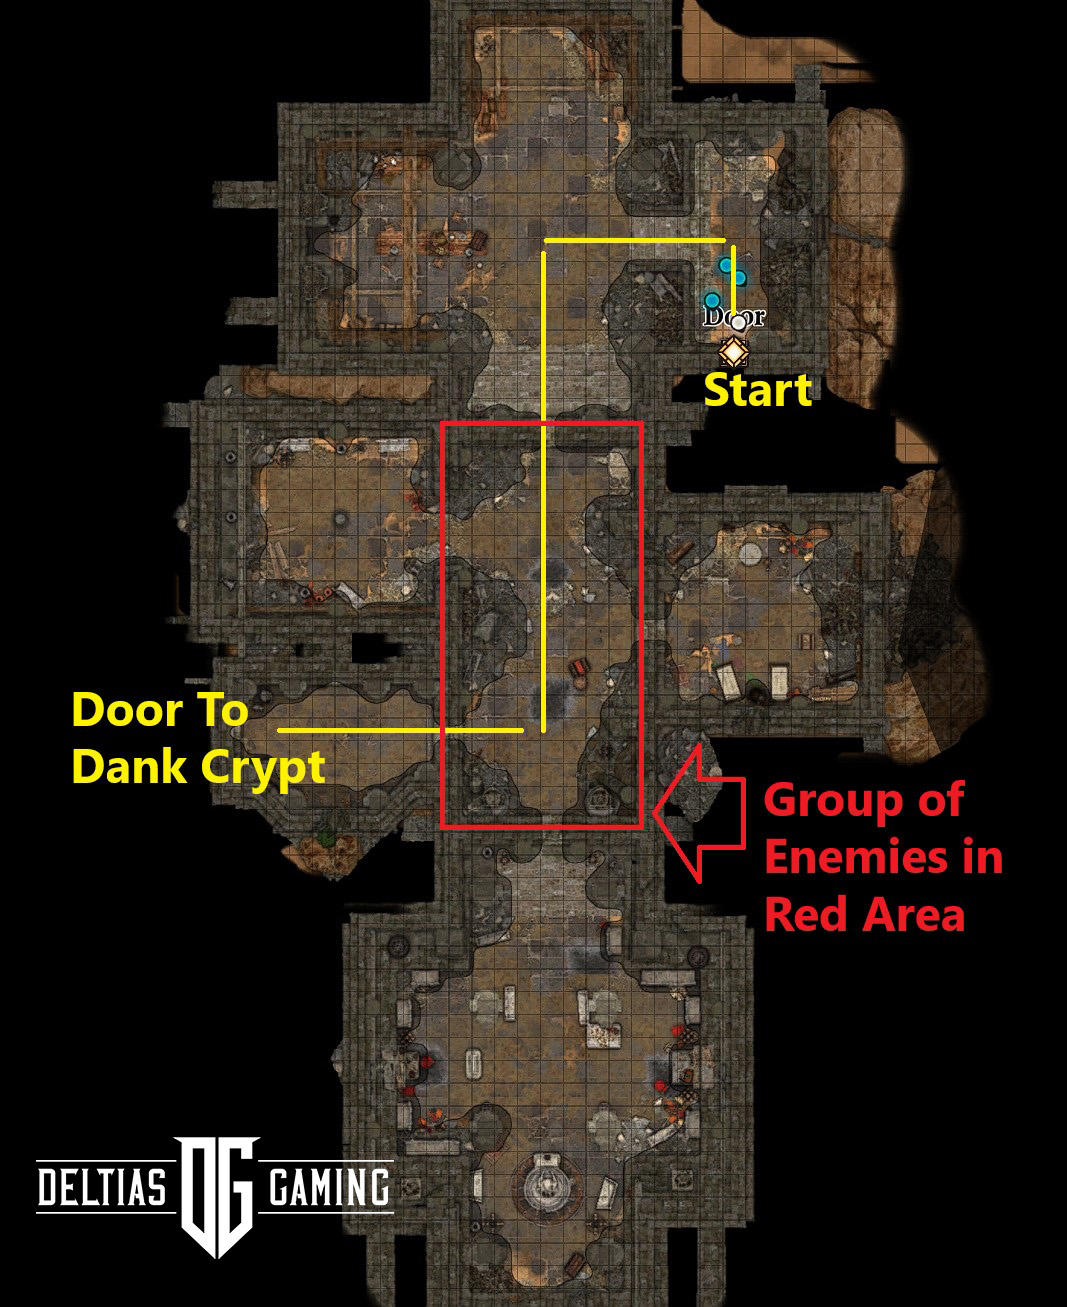 dank-crypt-location-1-baldur-s-gate-3-deltia-s-gaming